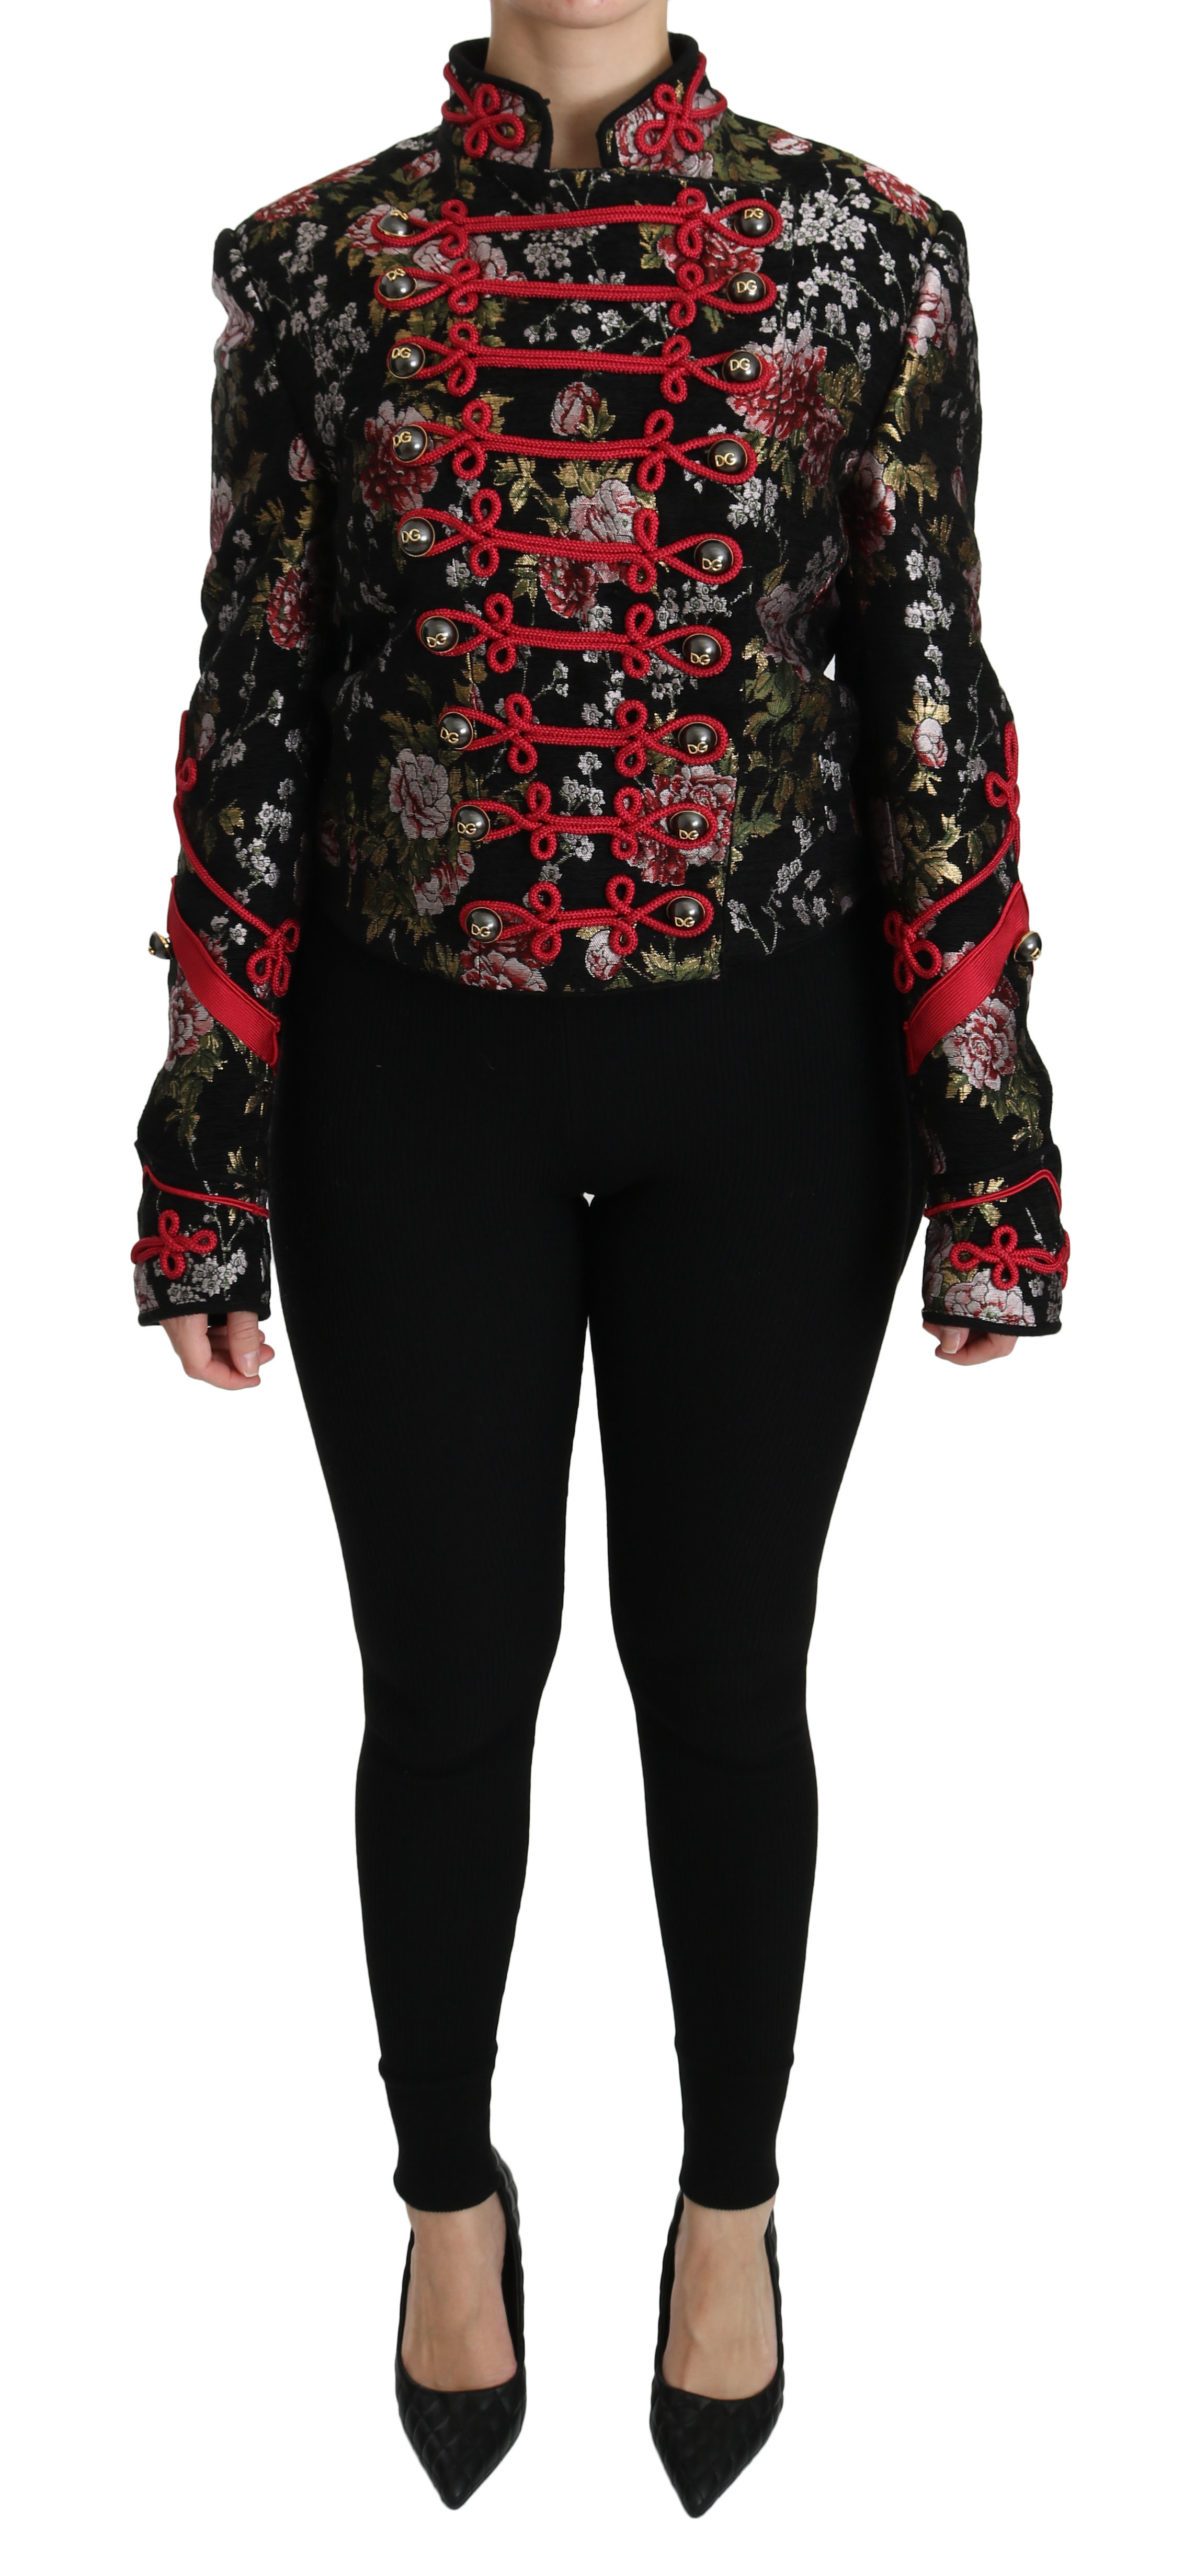 Dolce & Gabbana Women's Floral Print Jacquard Jacket Black JKT2491 - IT40|S